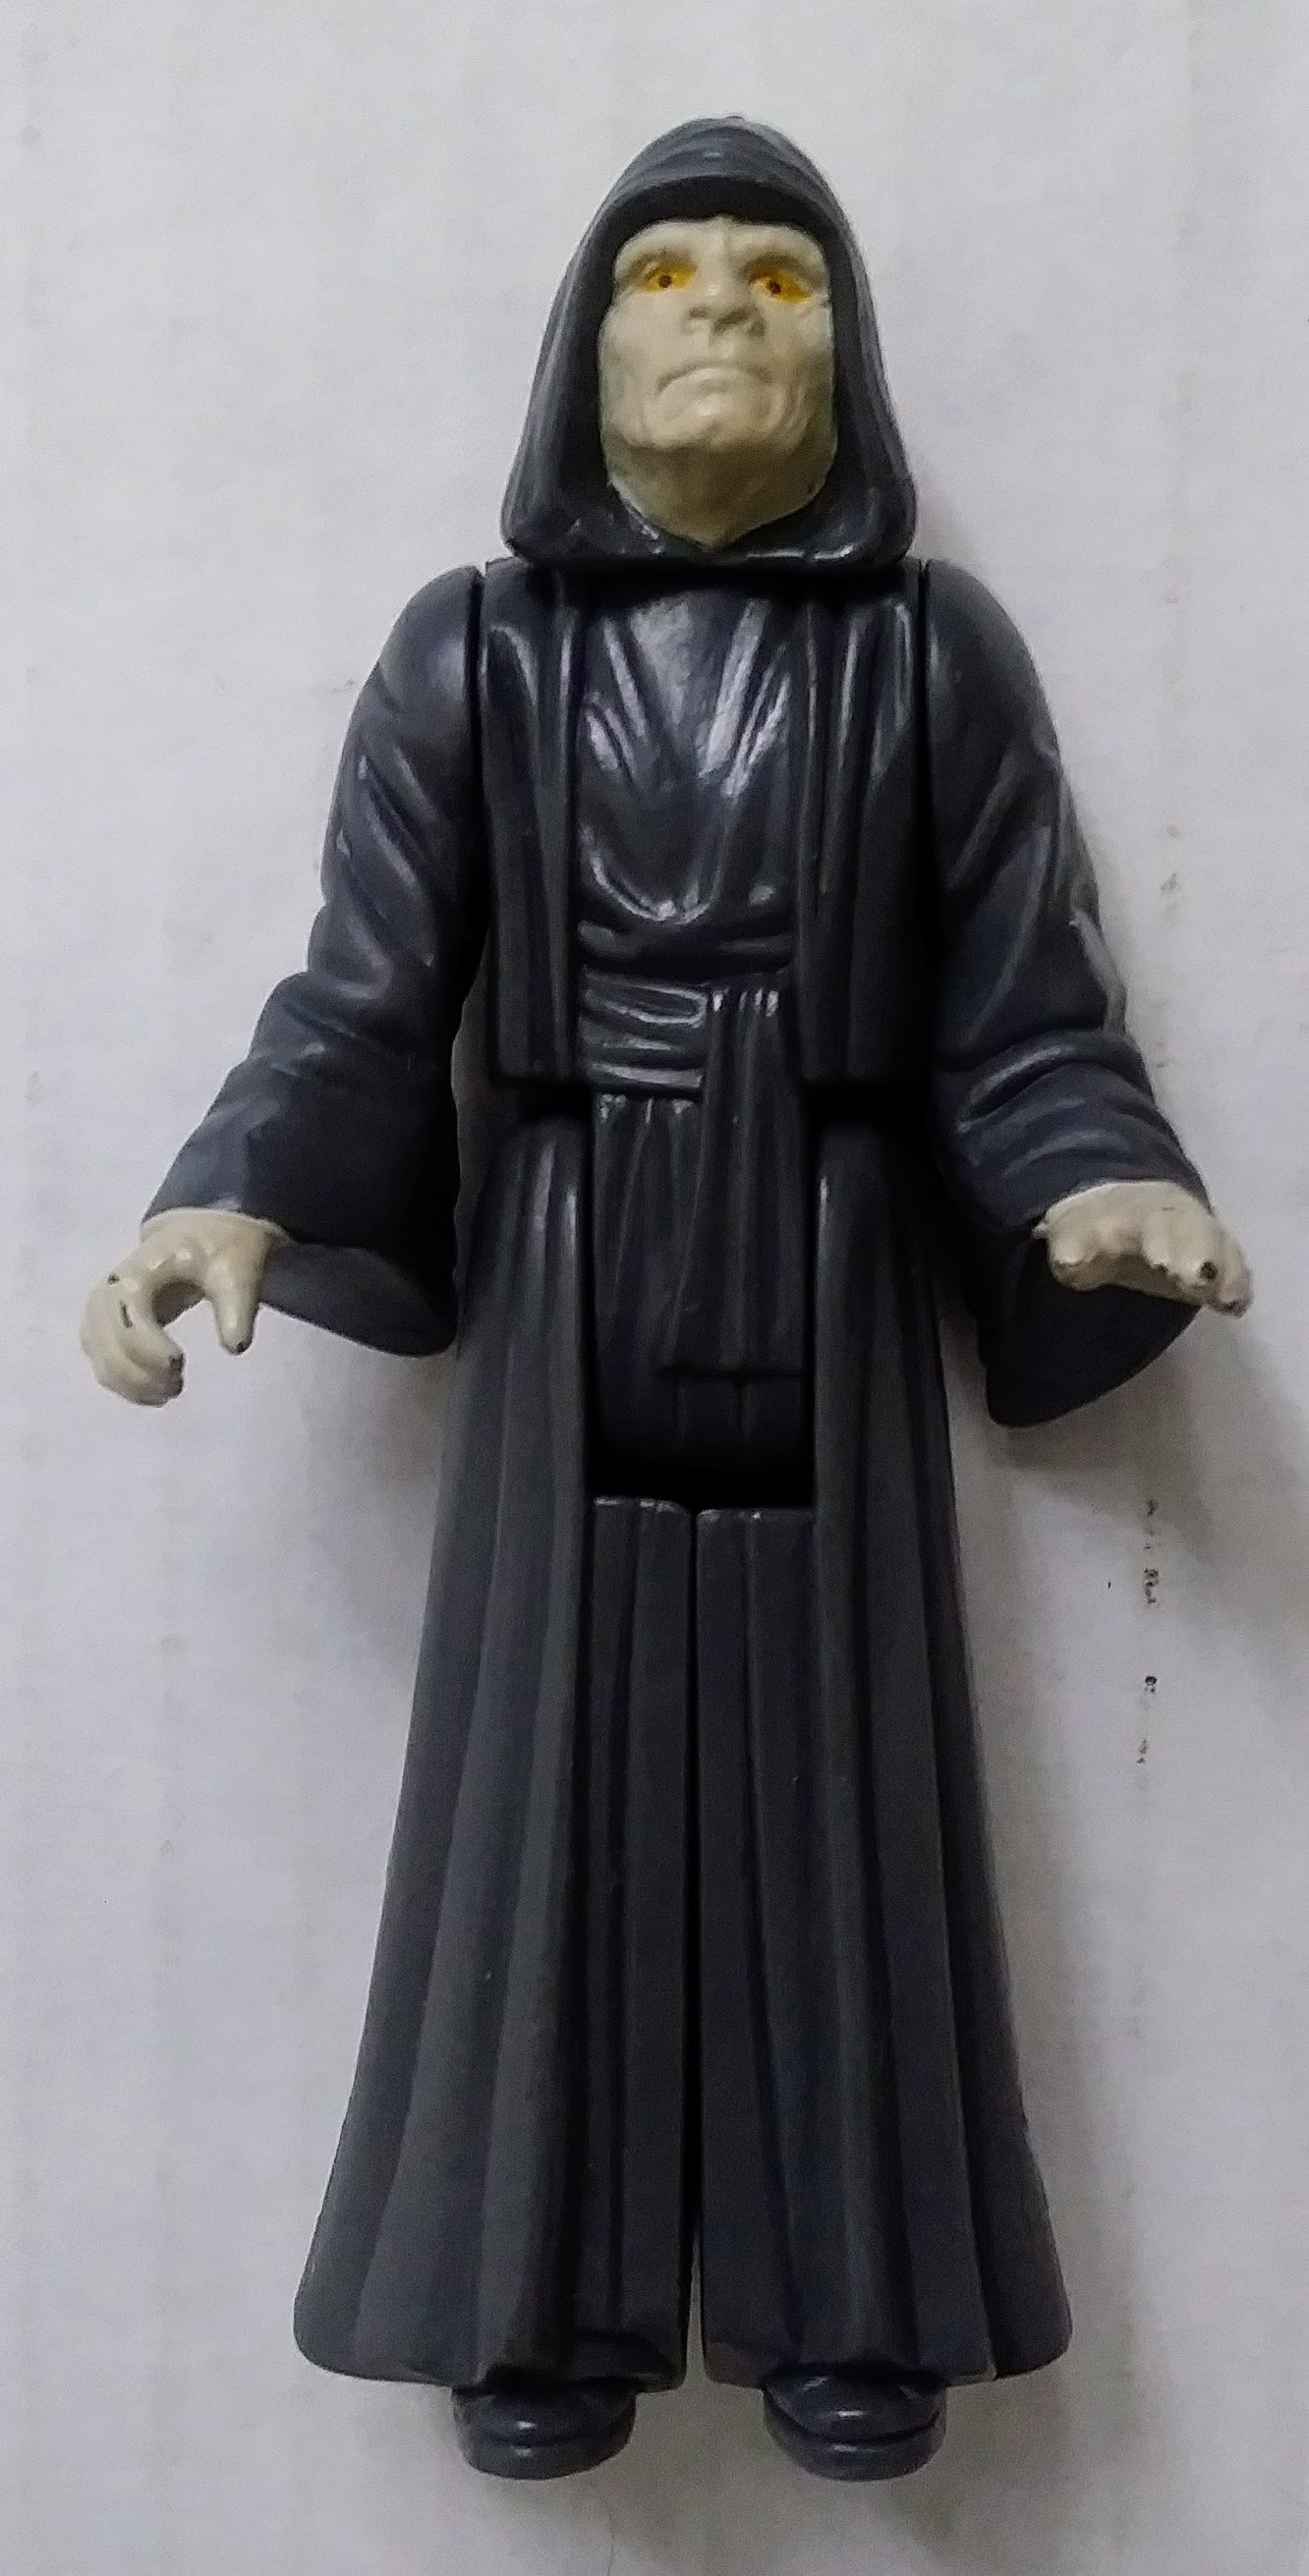 Star Wars action figure - Emperor Palpatine